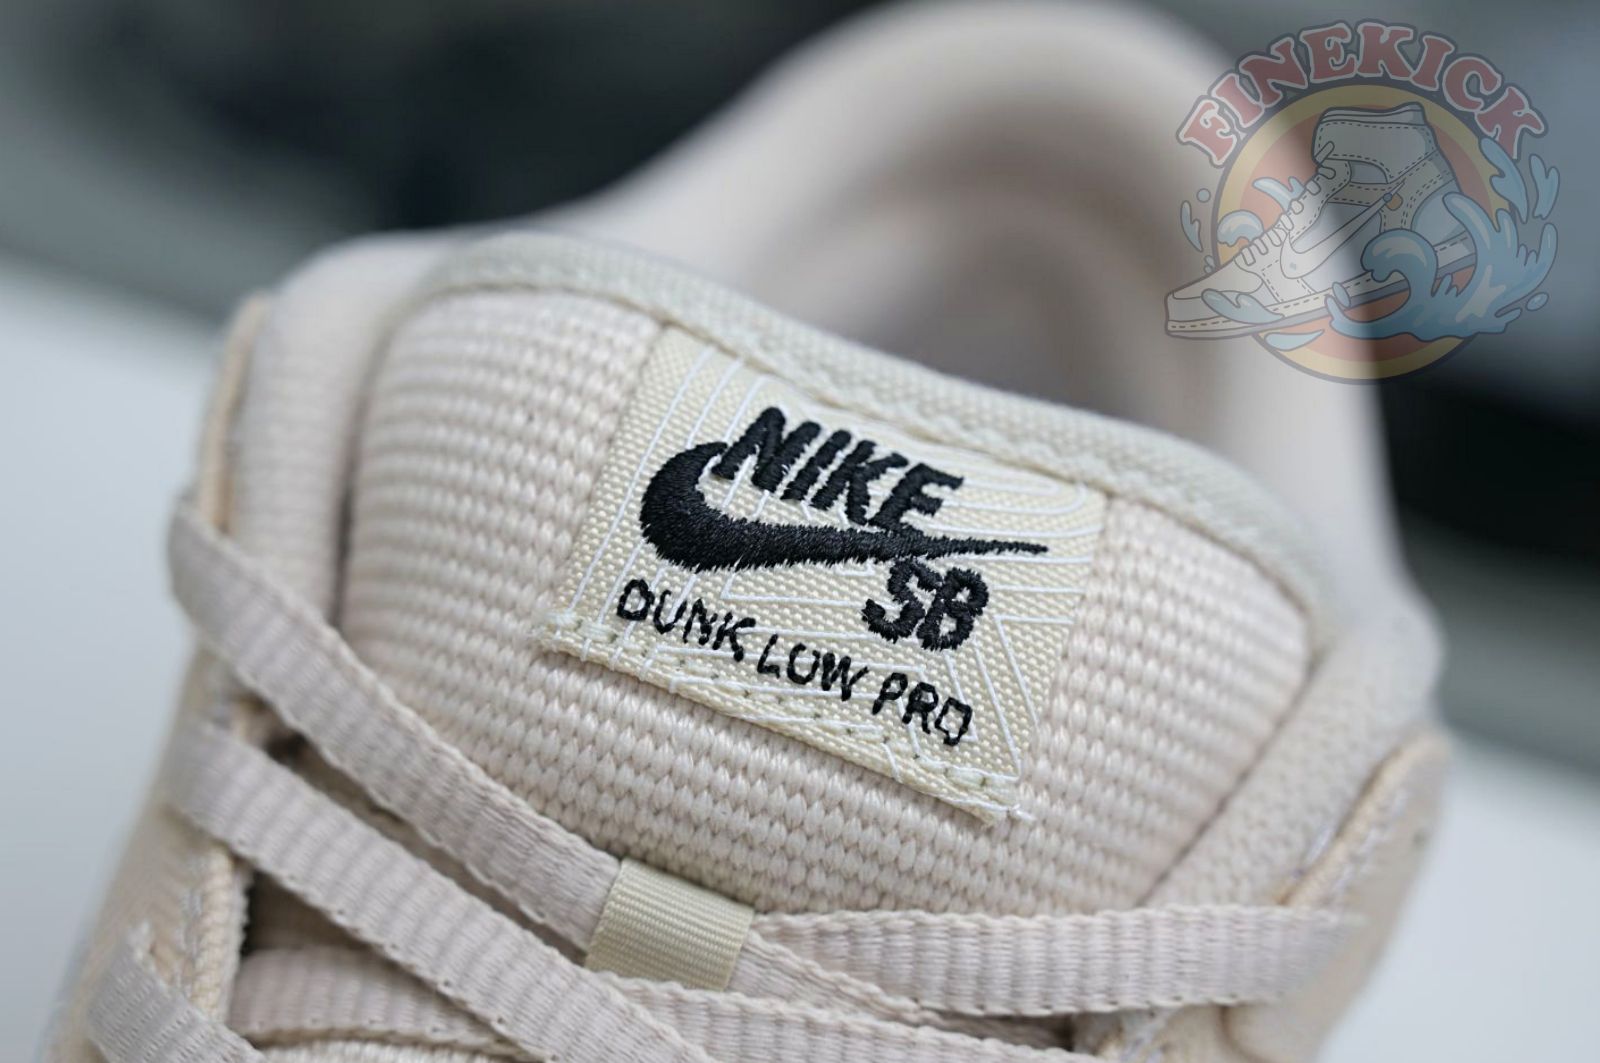 Albino & Preto x Nike Dunk SB Low Pro "Pearl White"